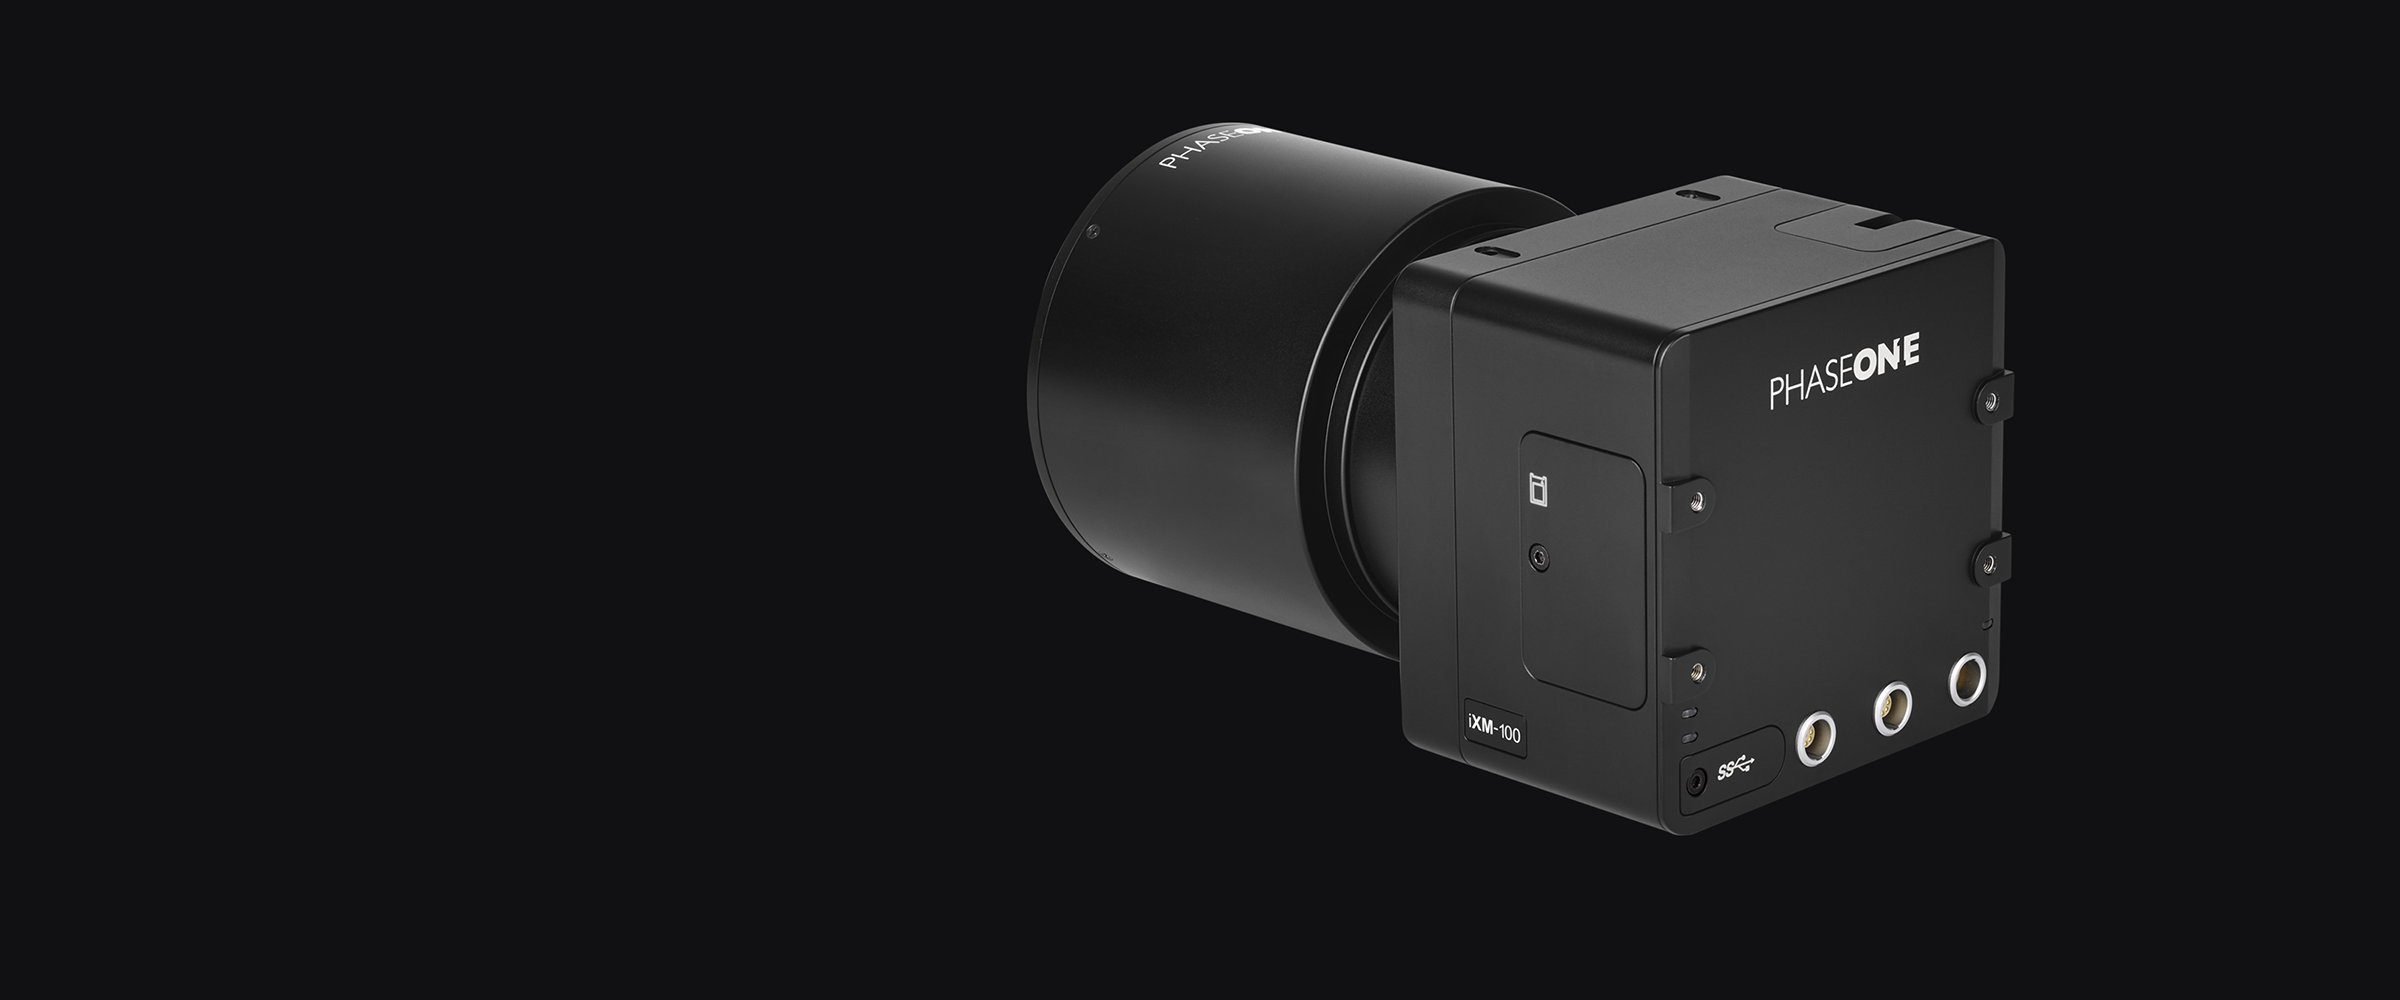 Phase One iXM-100 Inspection Camera